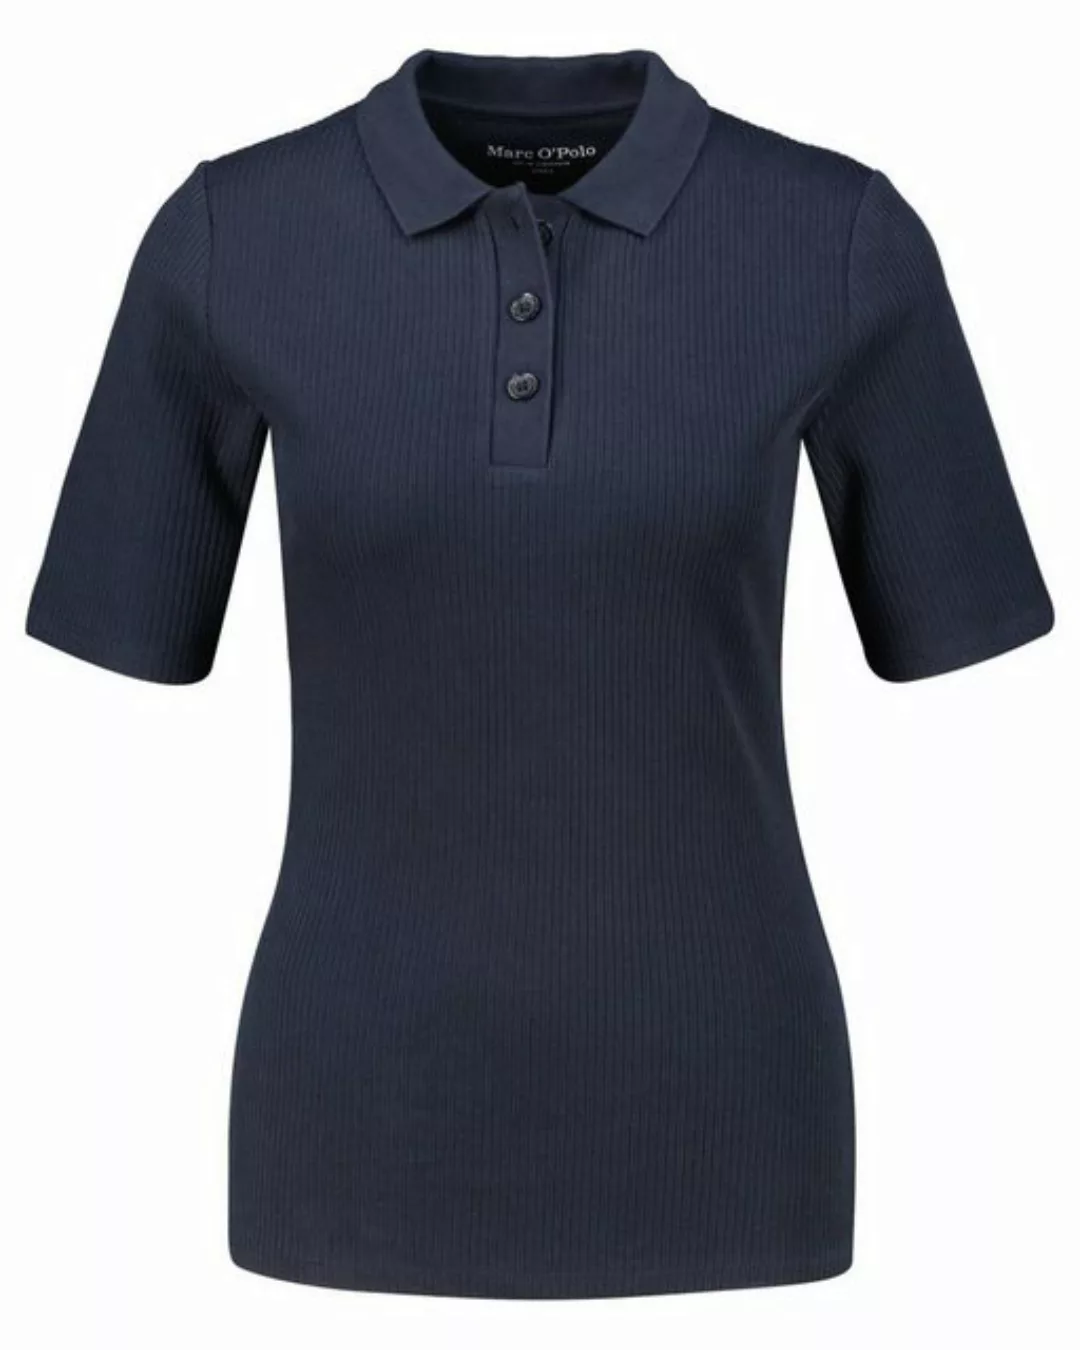 Marc O'Polo Shirtbluse Jersey polo, short sleeve, polo col günstig online kaufen